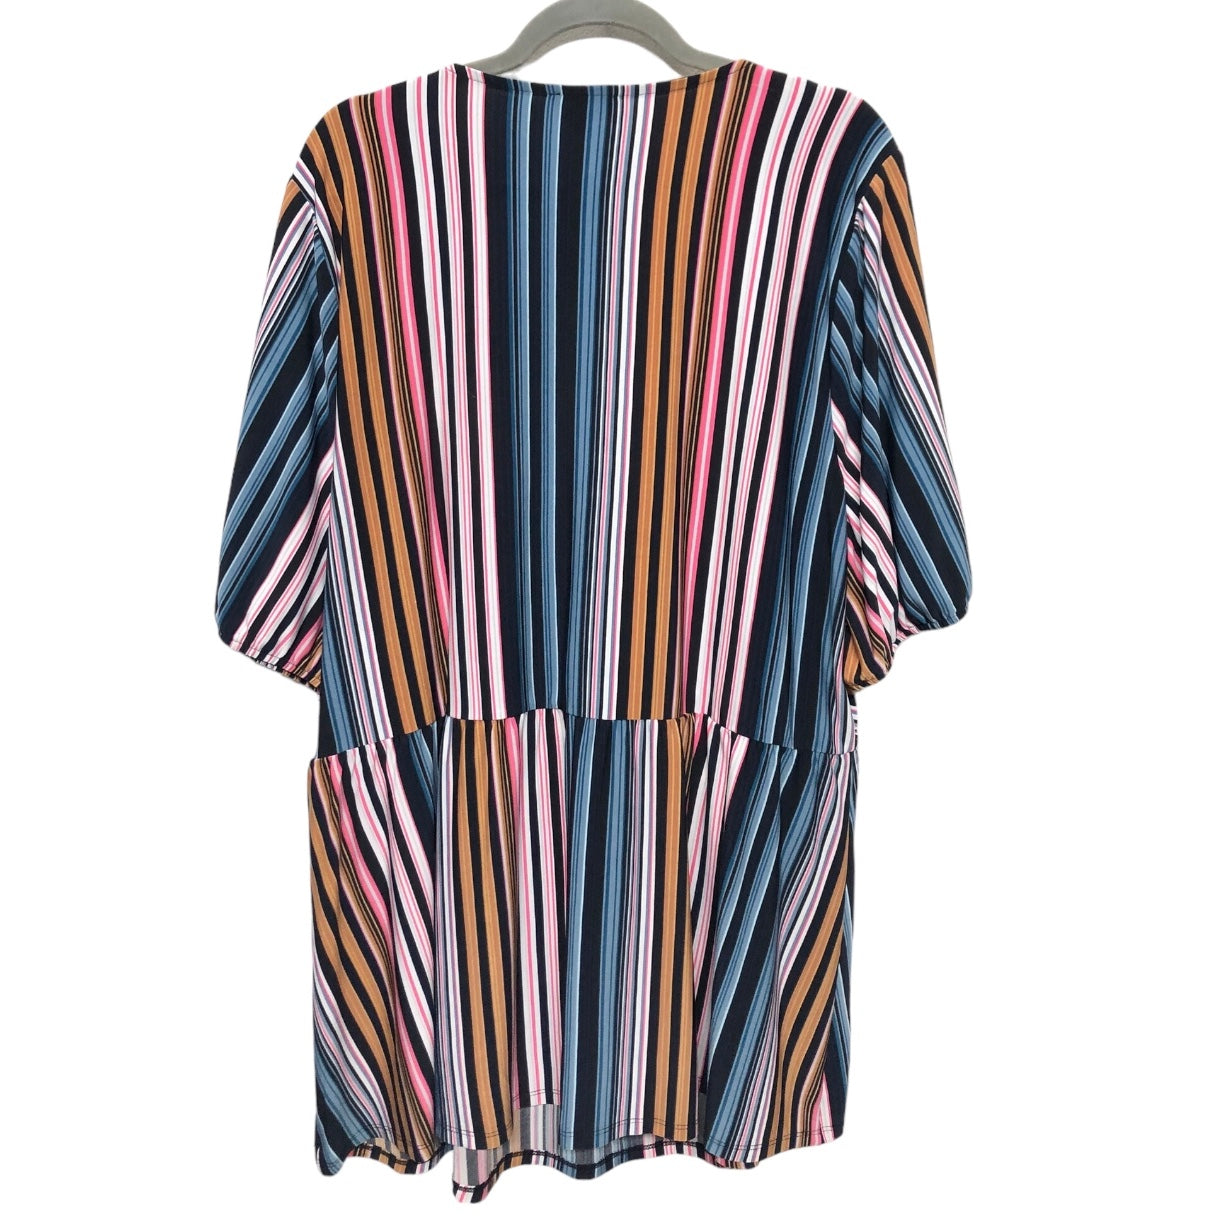 Striped Pattern Blouse Short Sleeve Lane Bryant, Size 26